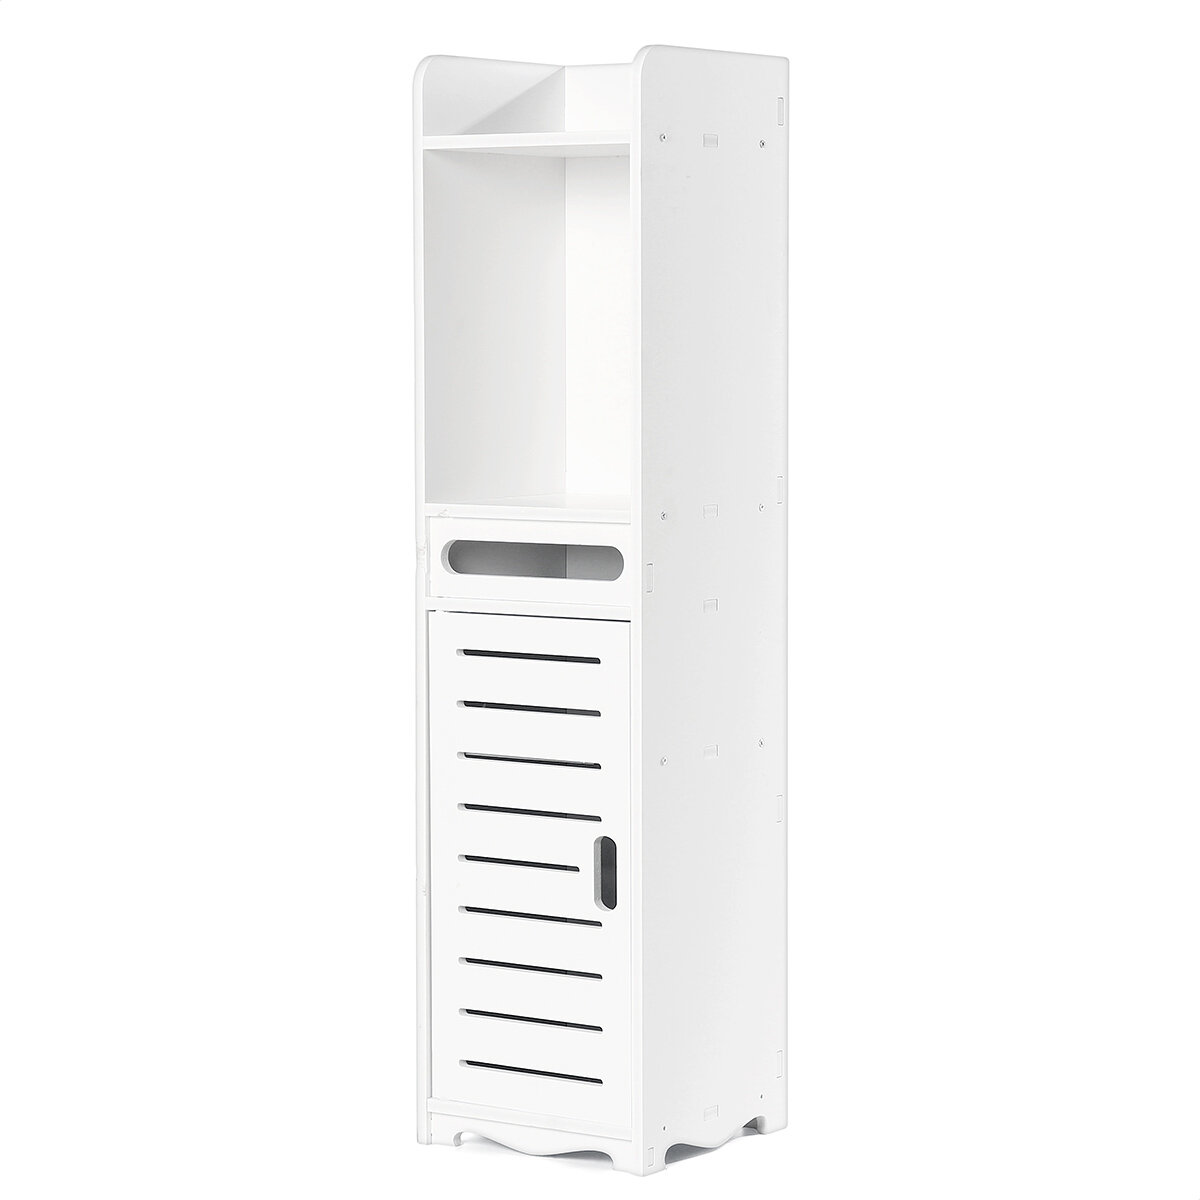 Image of Bathroom Toilet Storage Cabinet Organizer Shelf Standing Rack Cupboard Holder